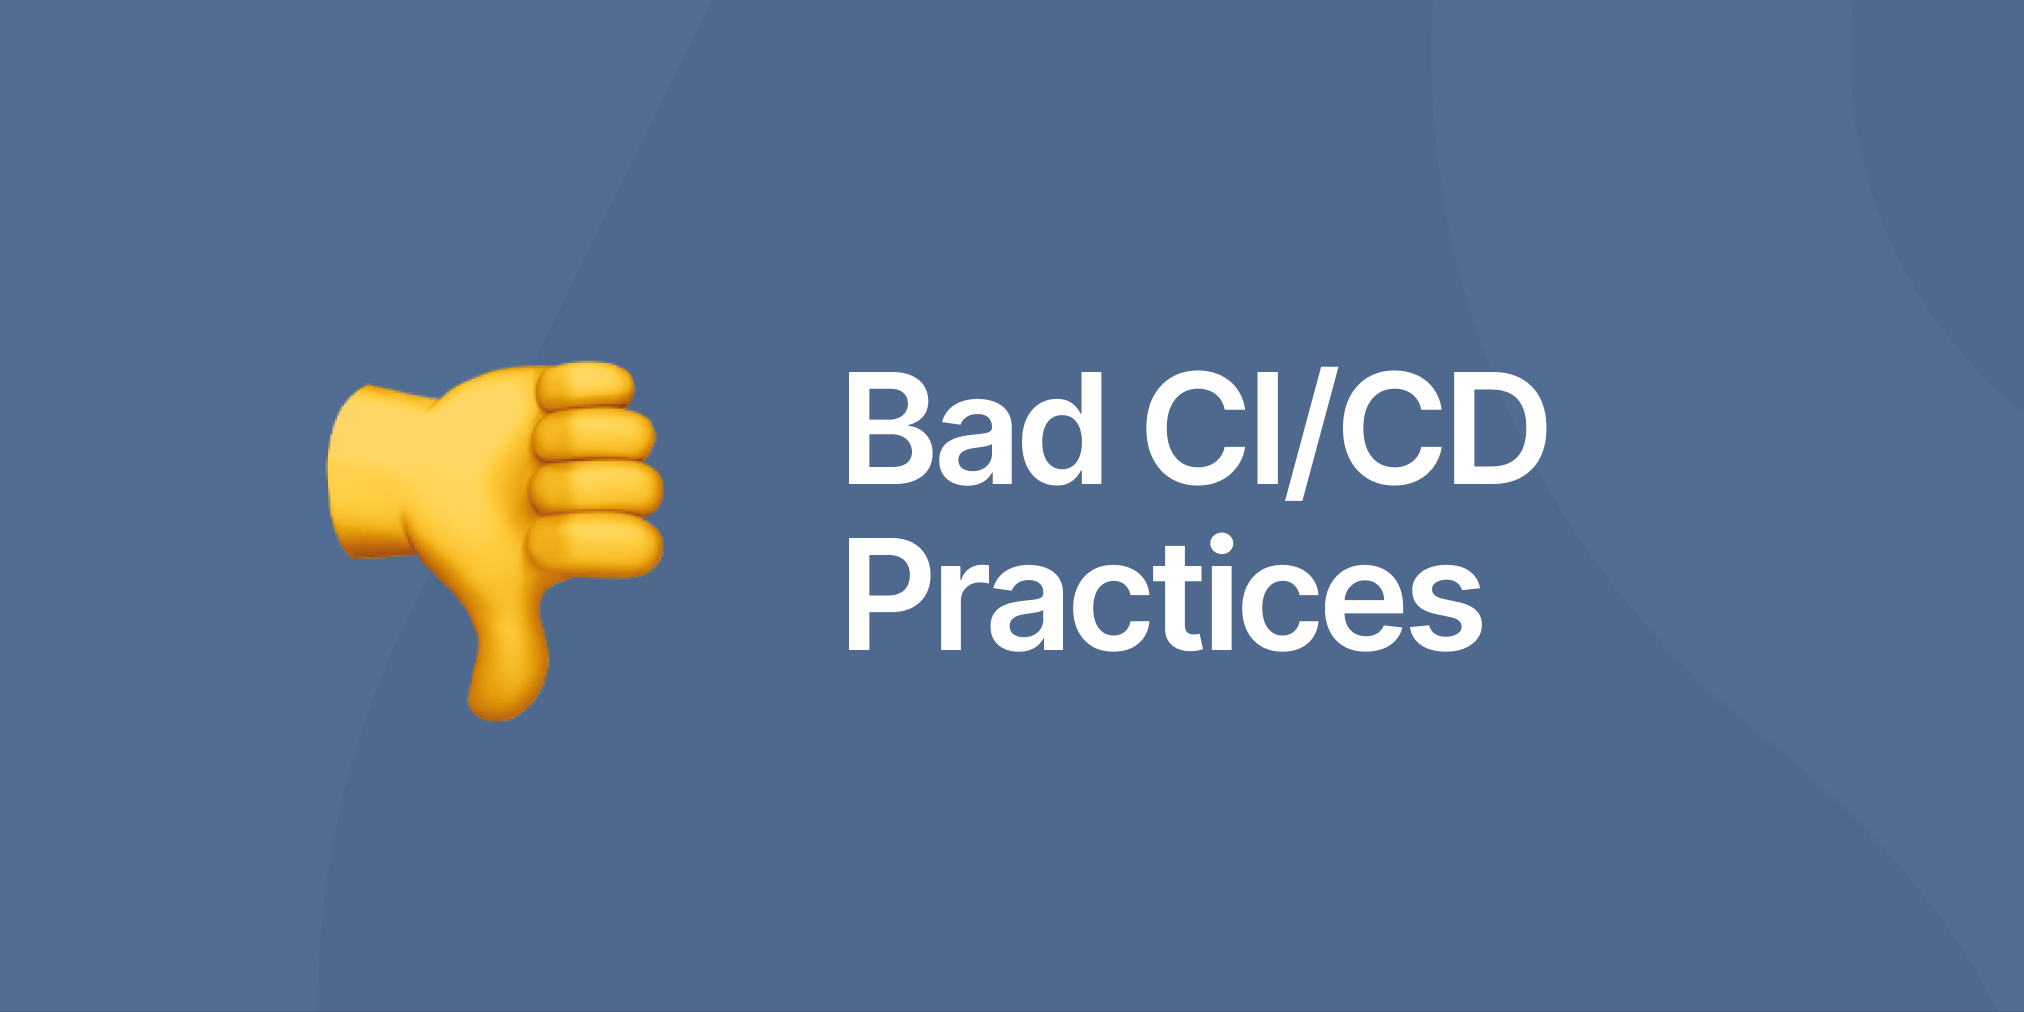 Bad CI/CD Practices